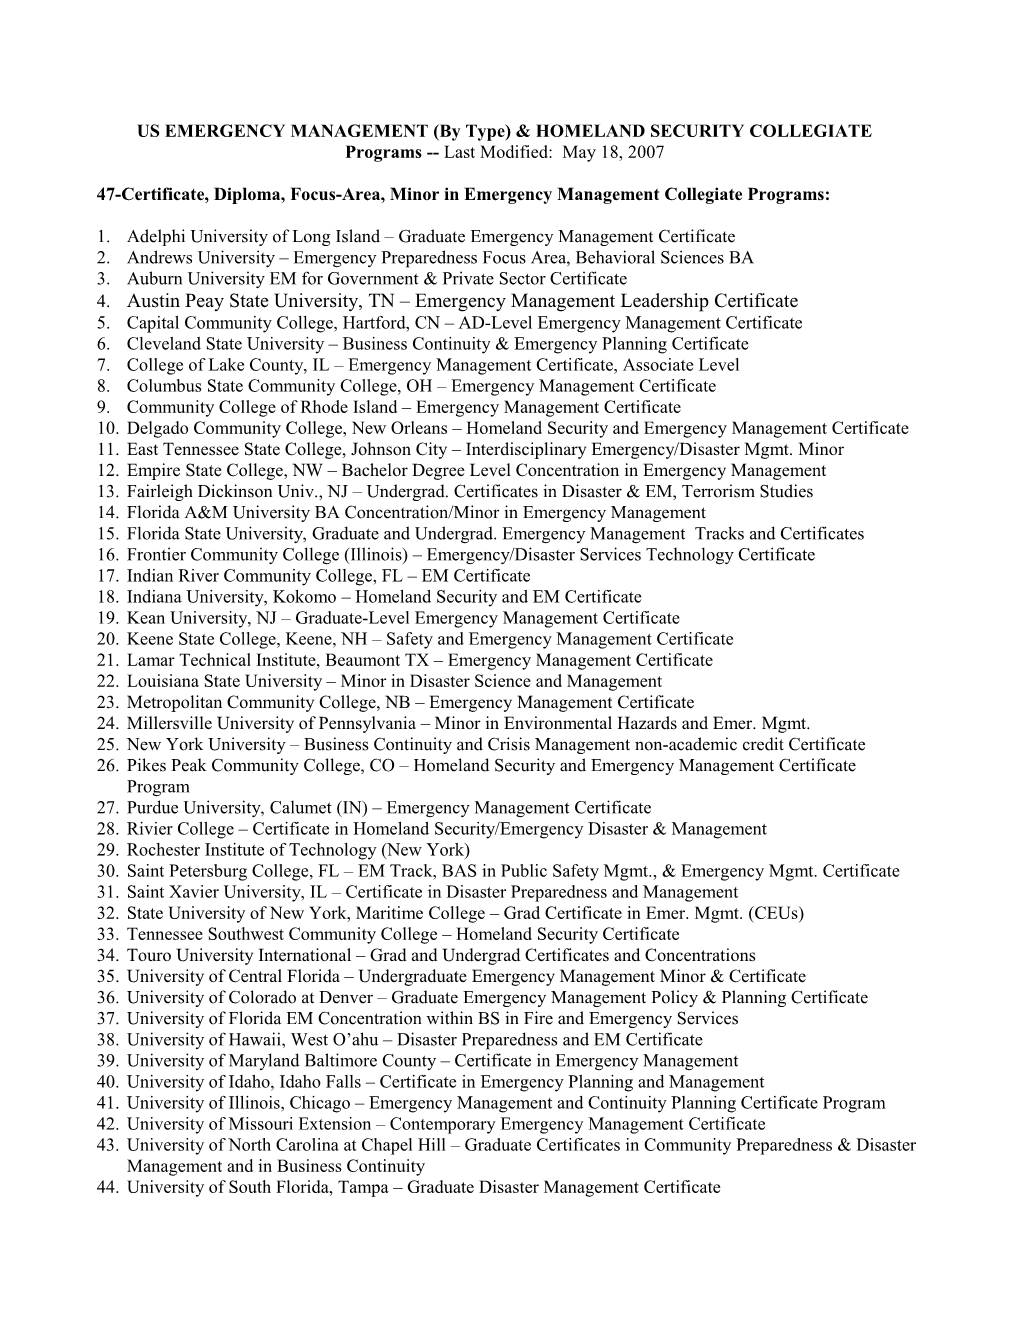 Emergency Management Collegiate Programs In The U